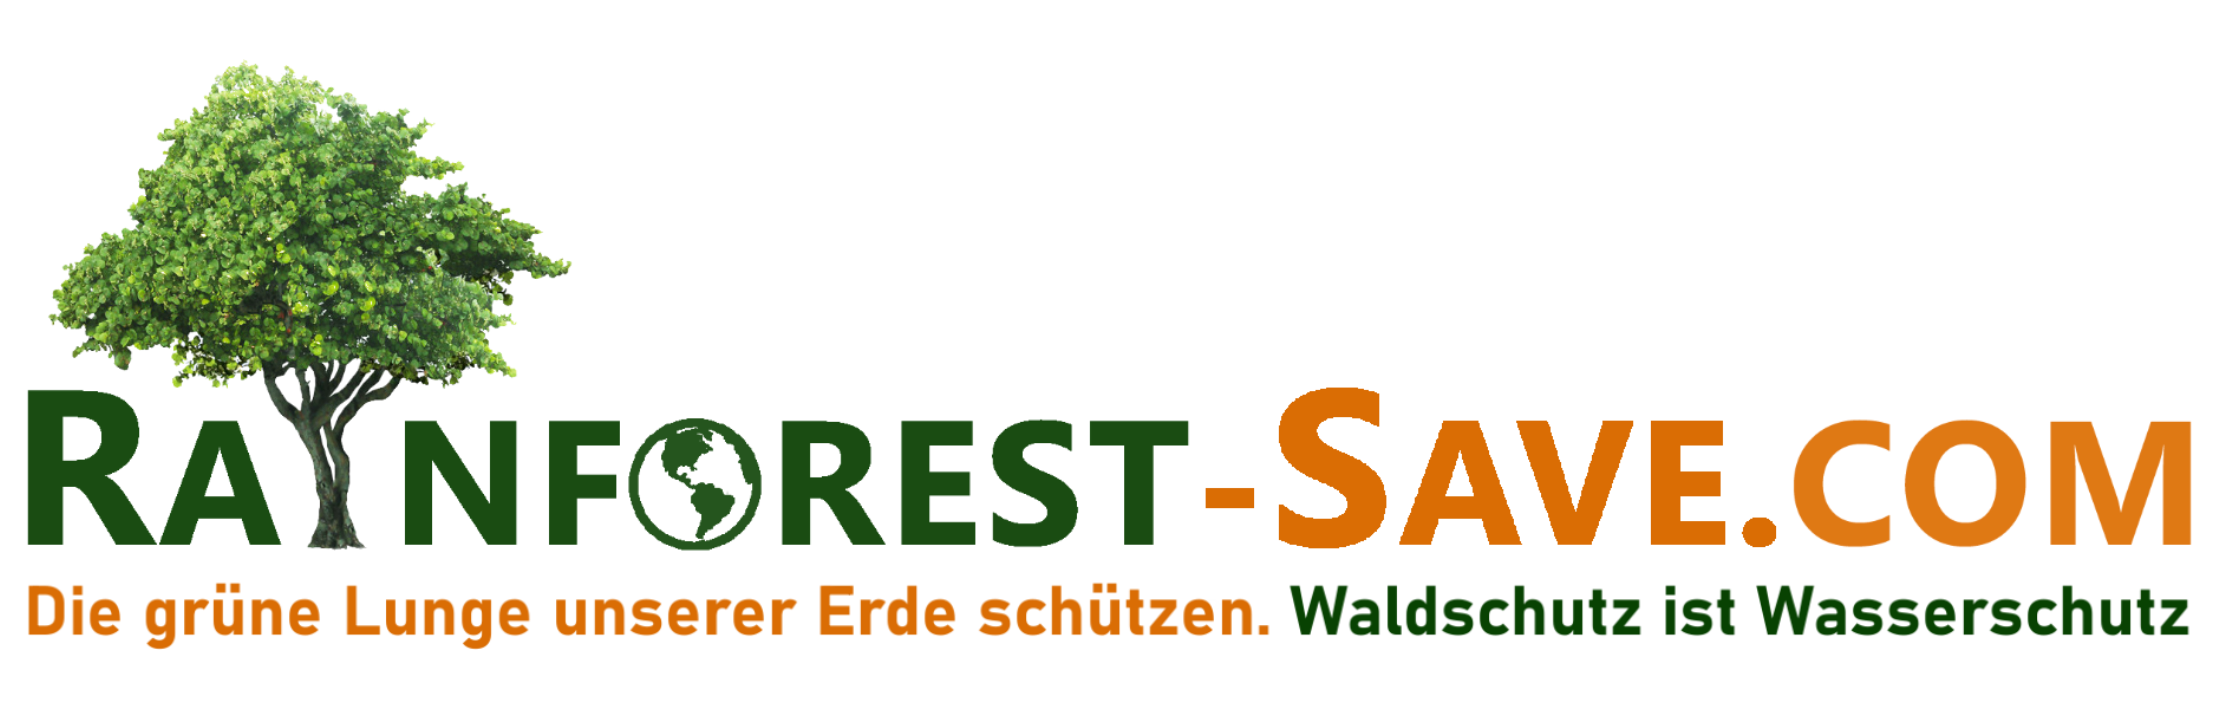 (c) Rainforest-save.com